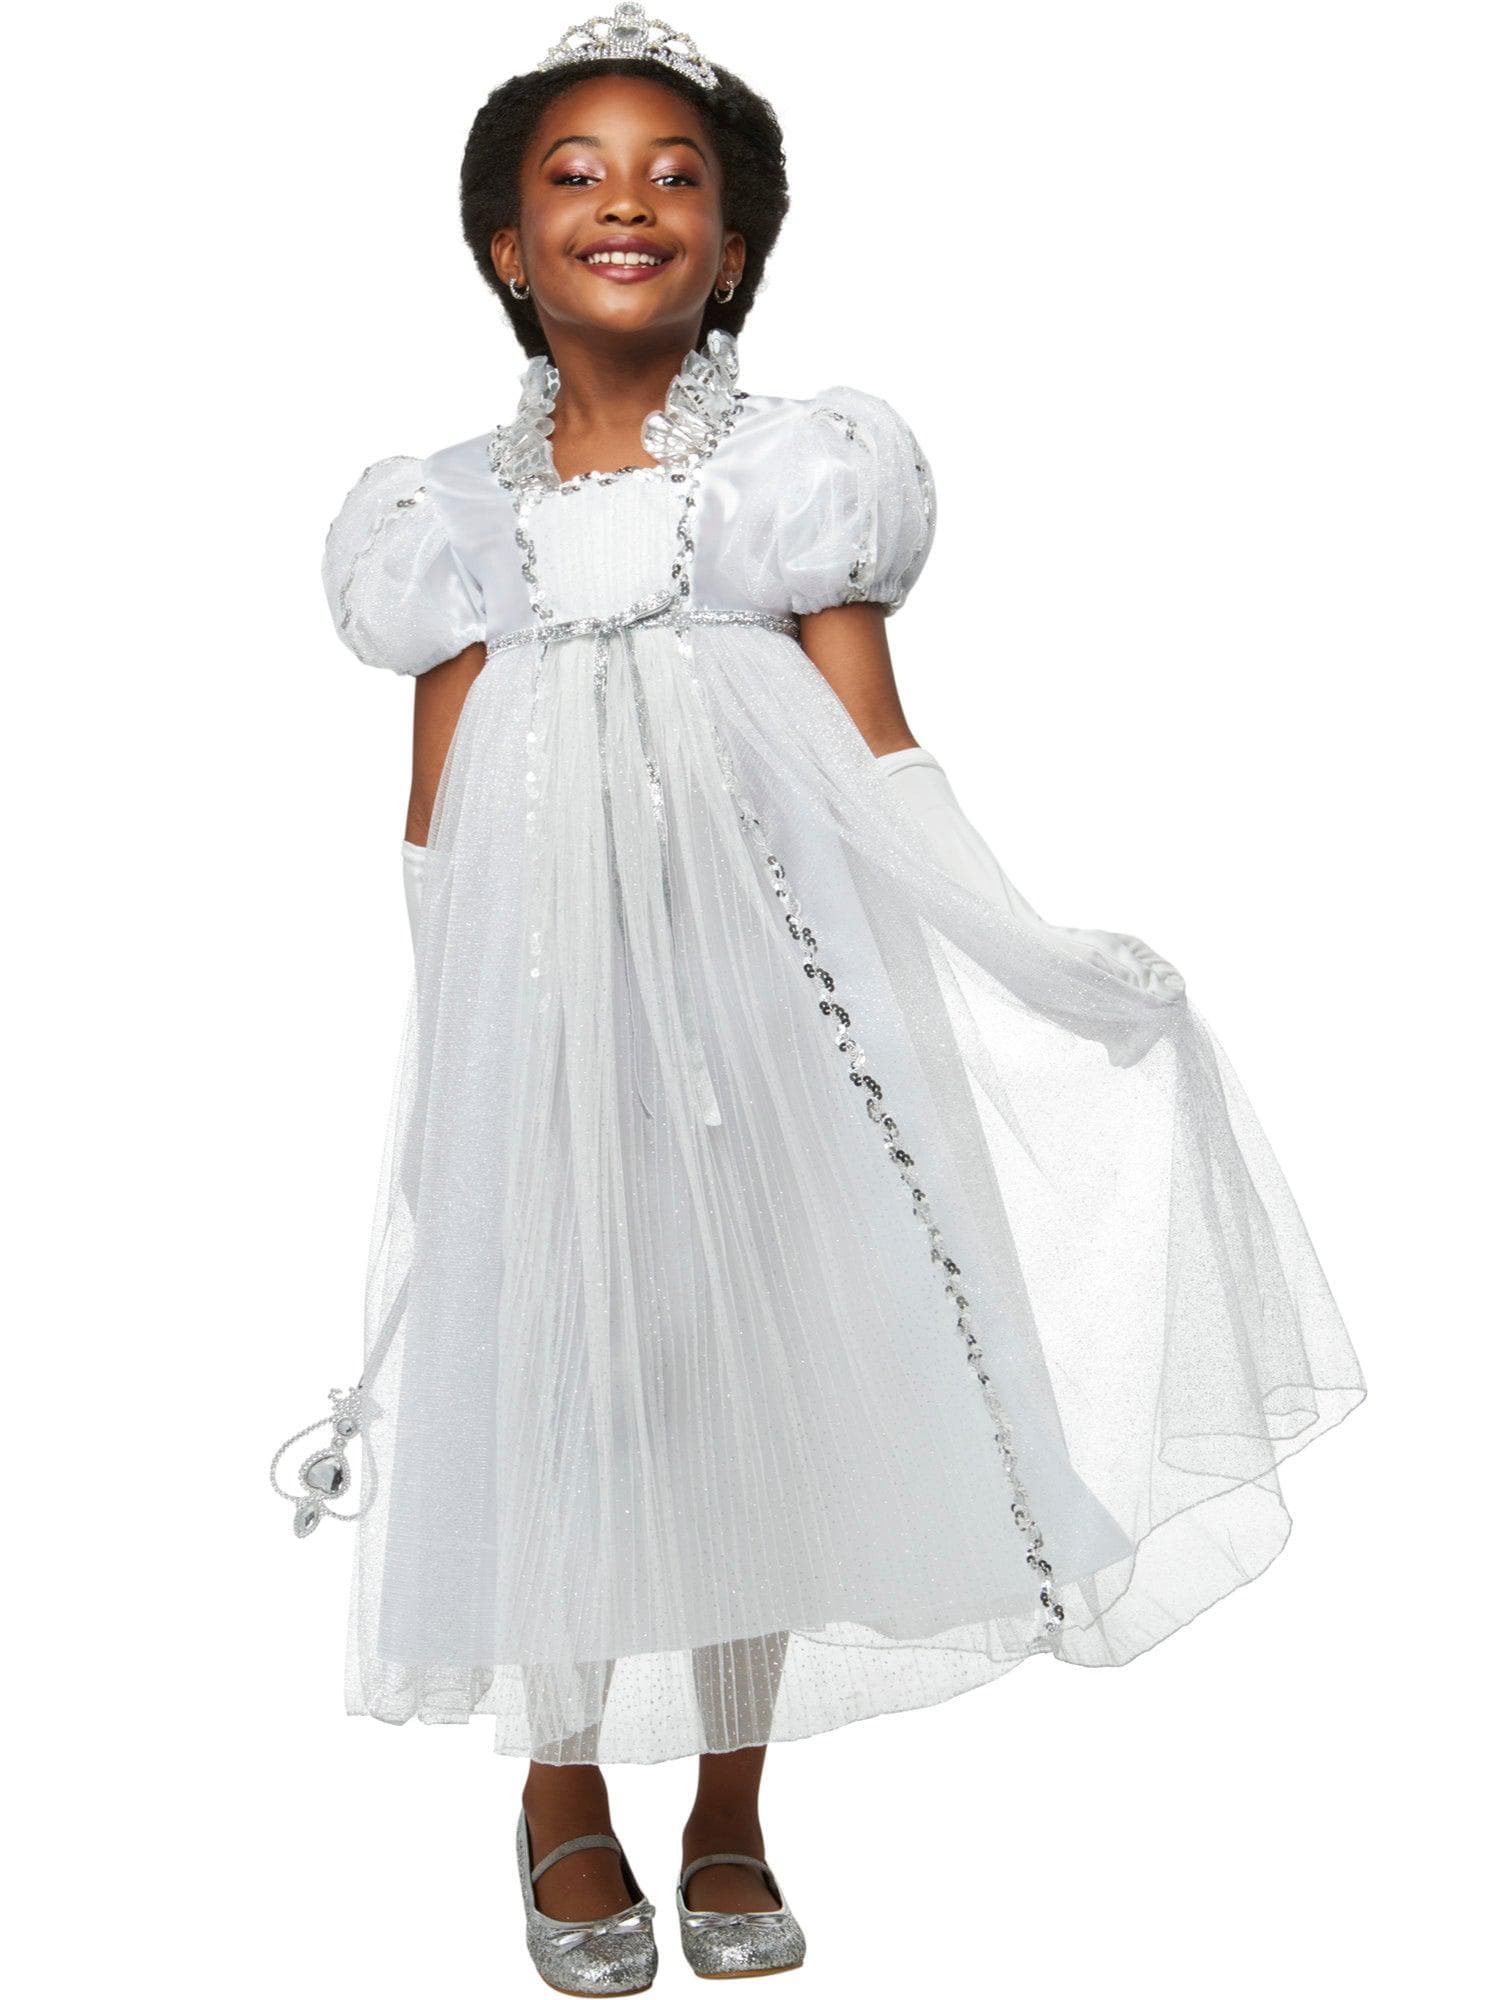 White Princess Kids Costume - costumes.com